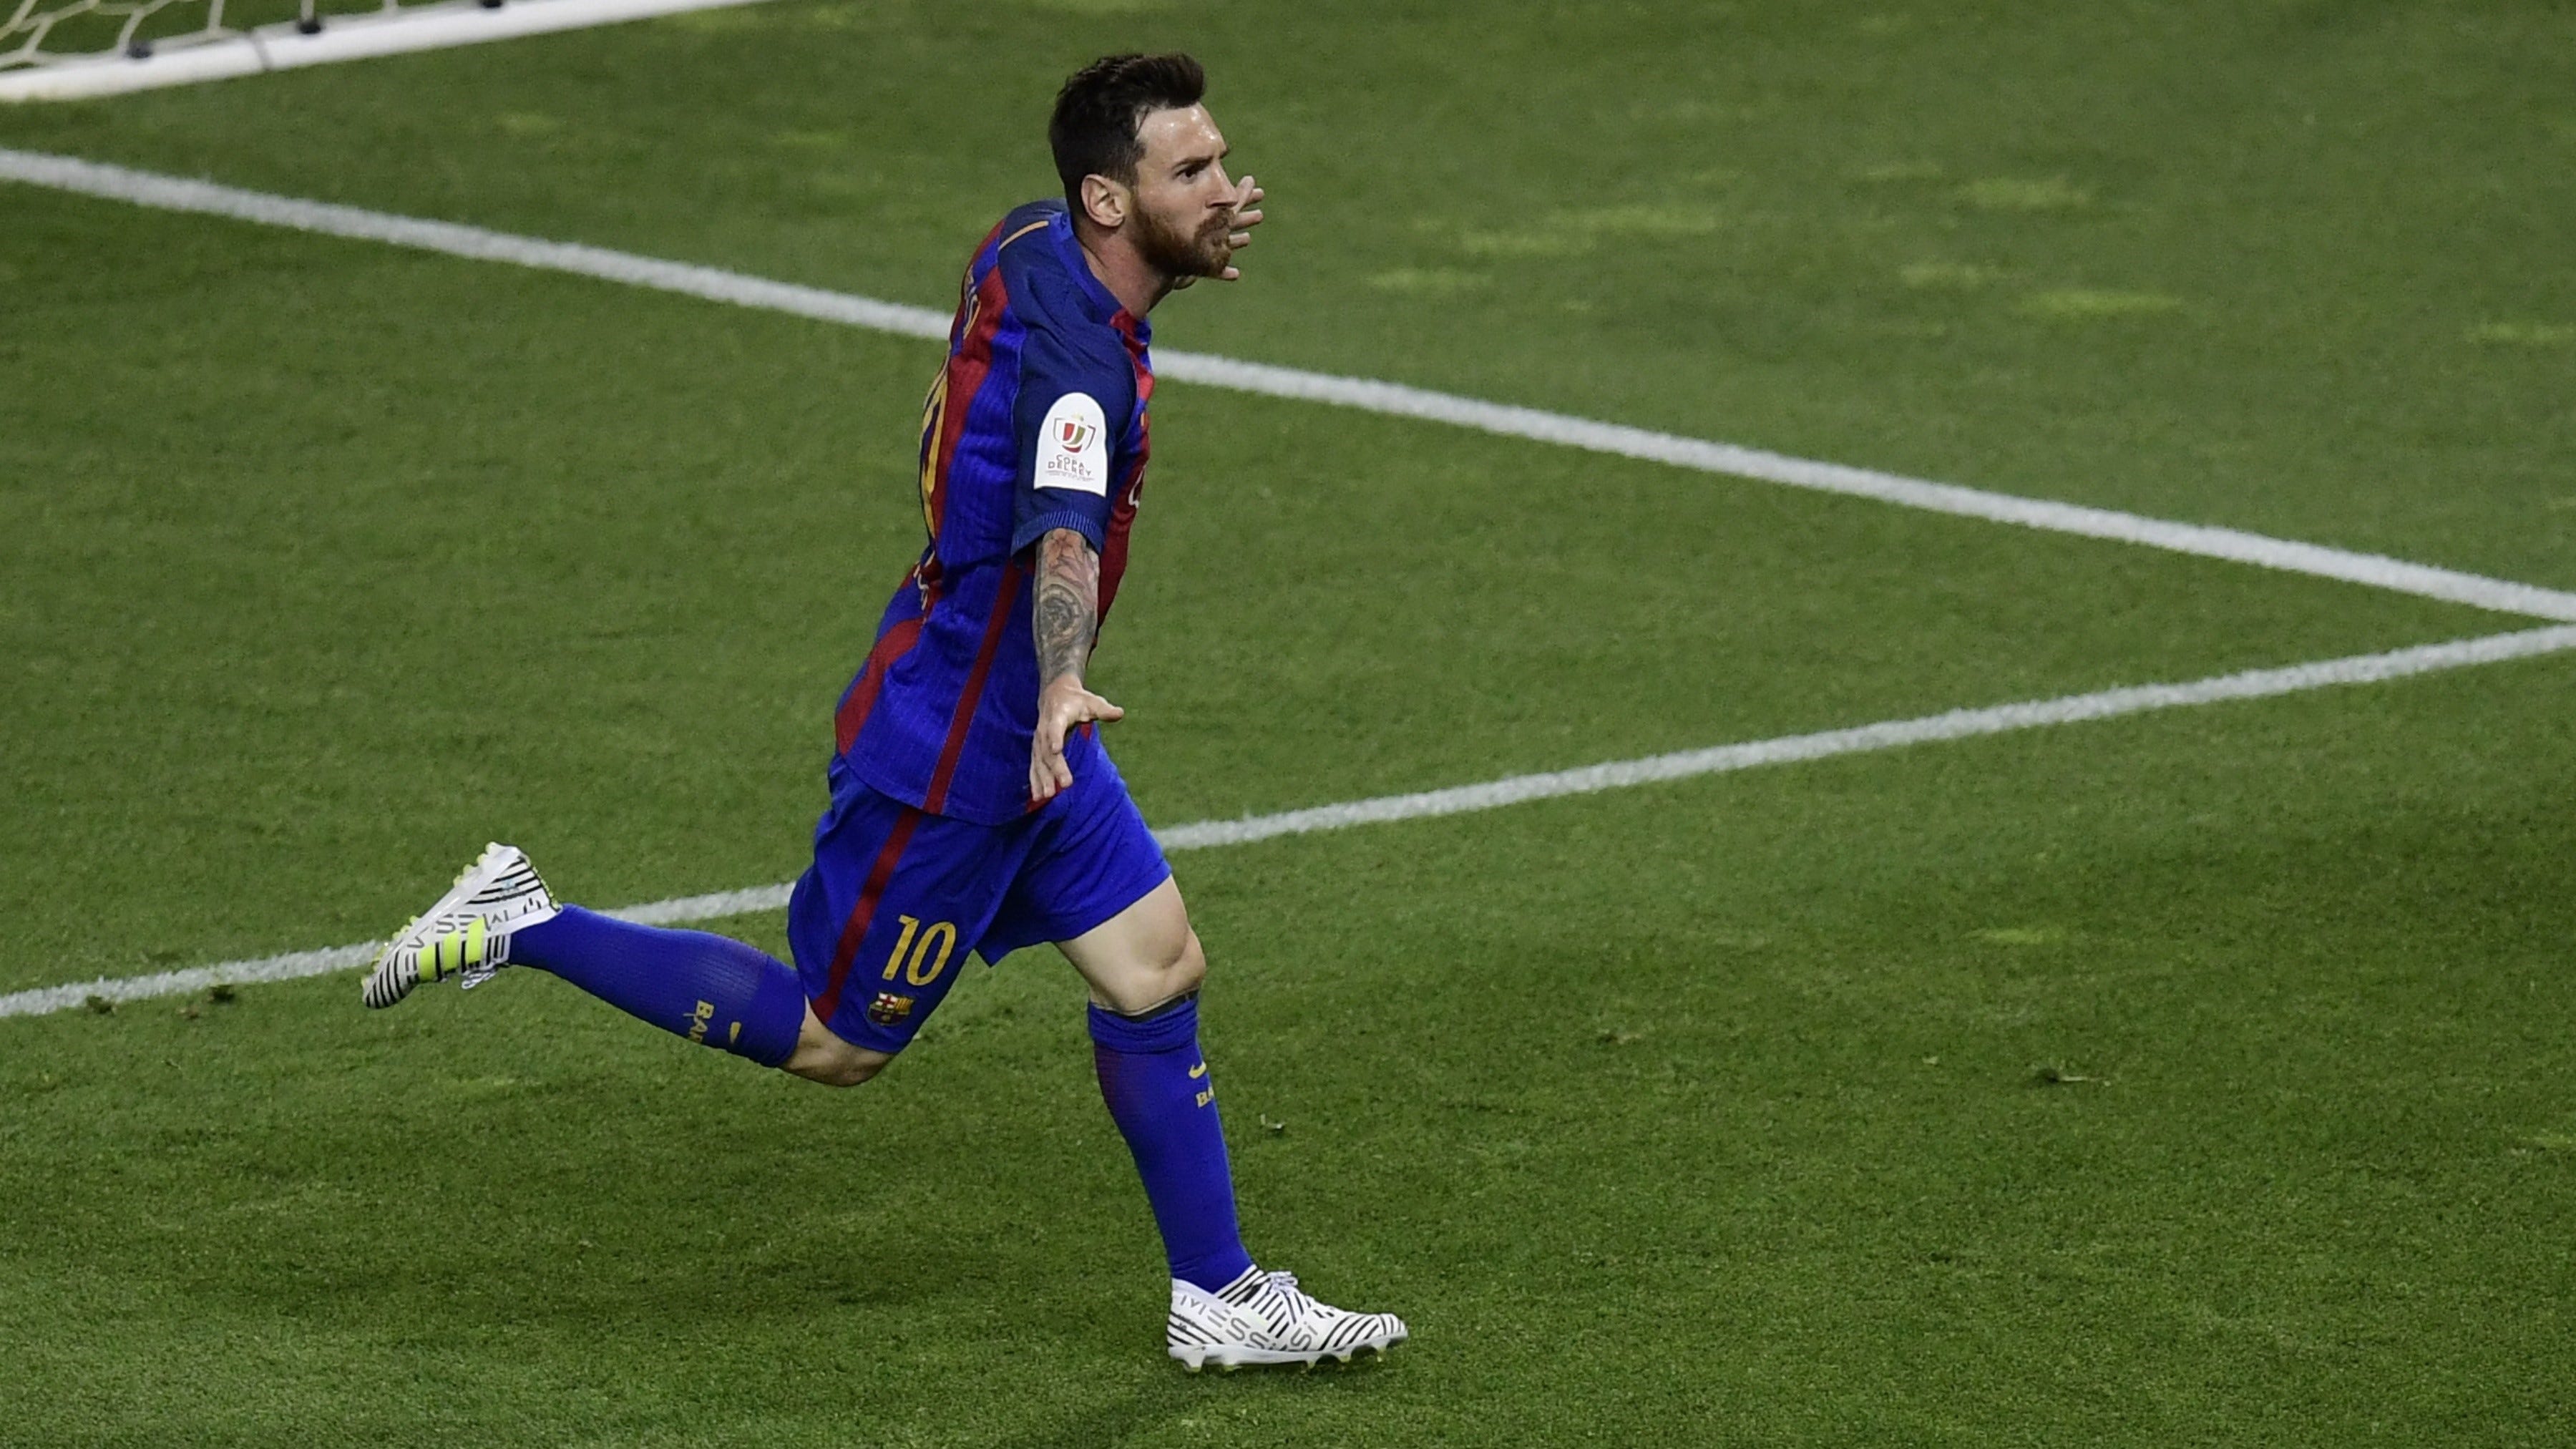 Messi, Bale y el once ideal jugadores que llevan Adidas | Goal.com Espana